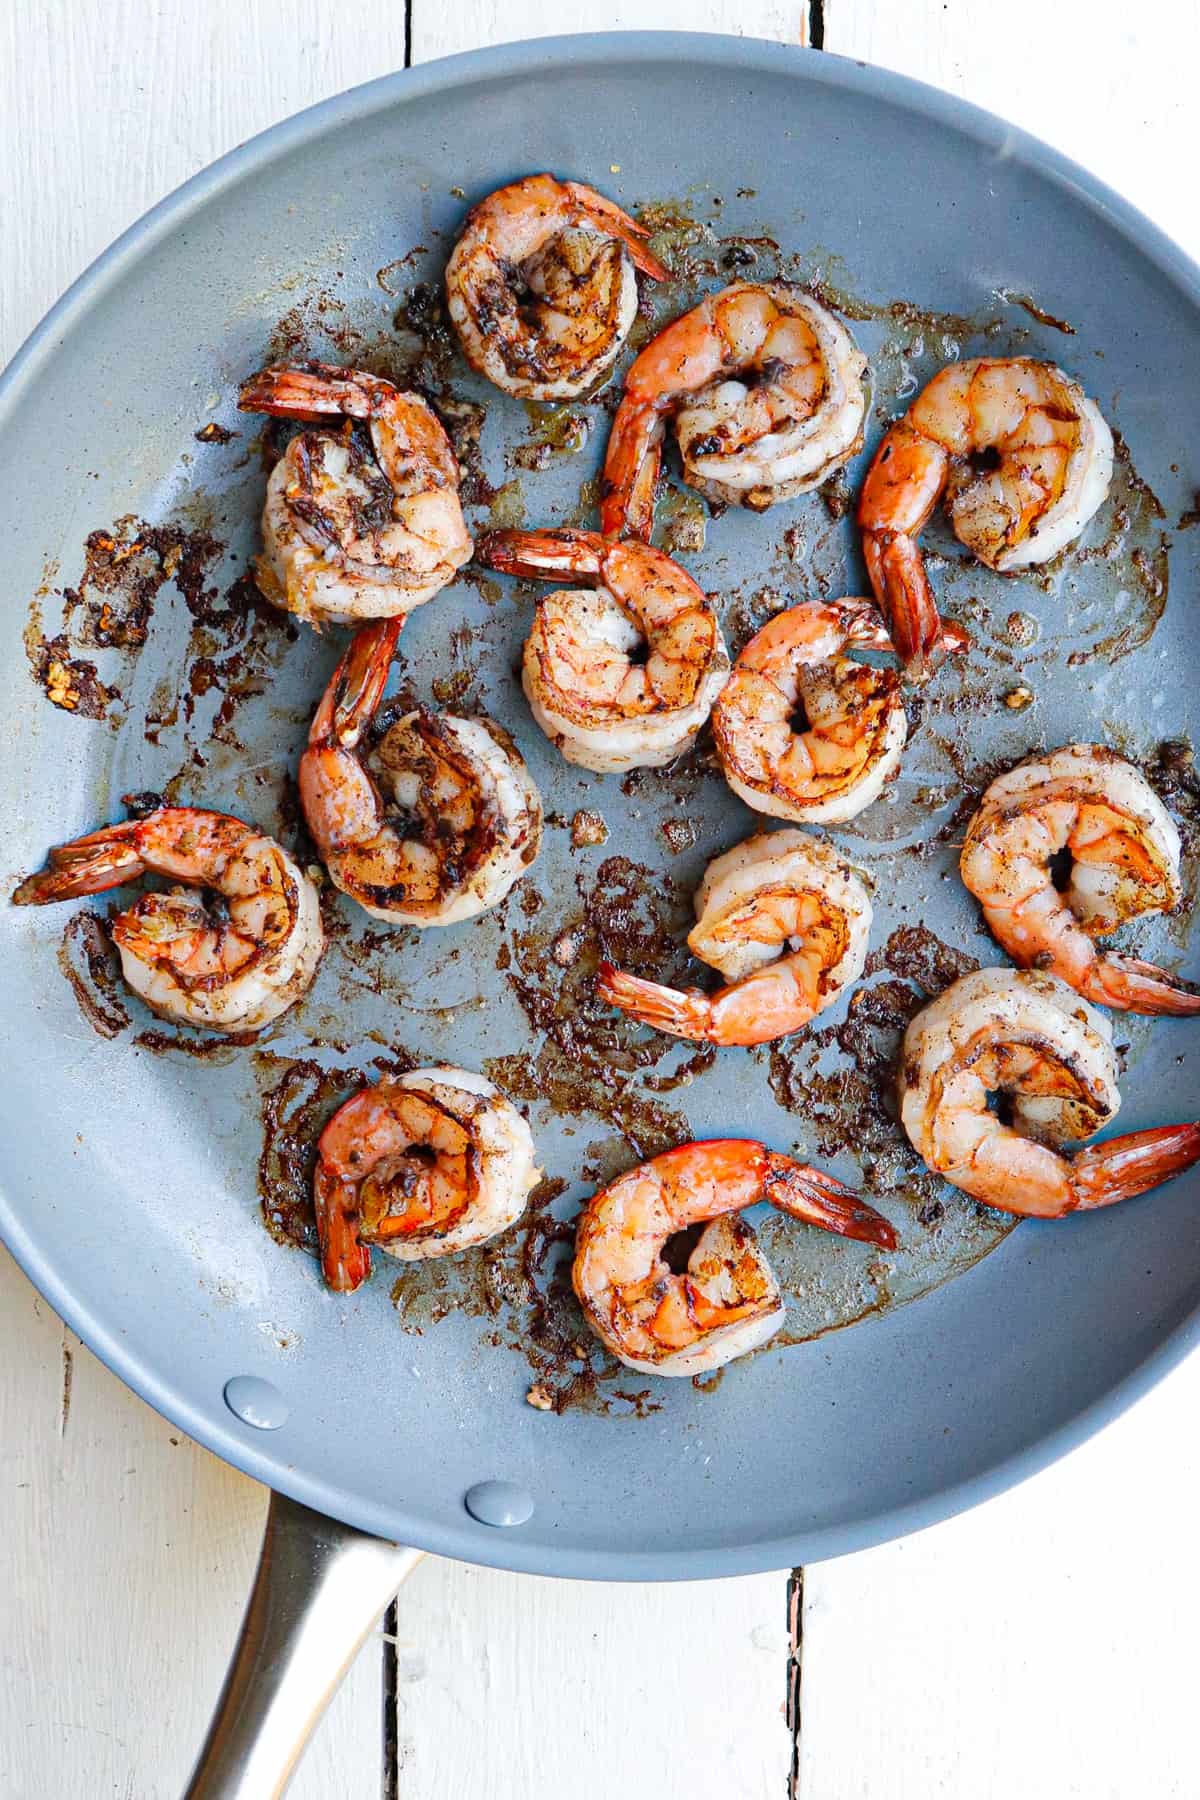 shrimp cooked in frying pan.